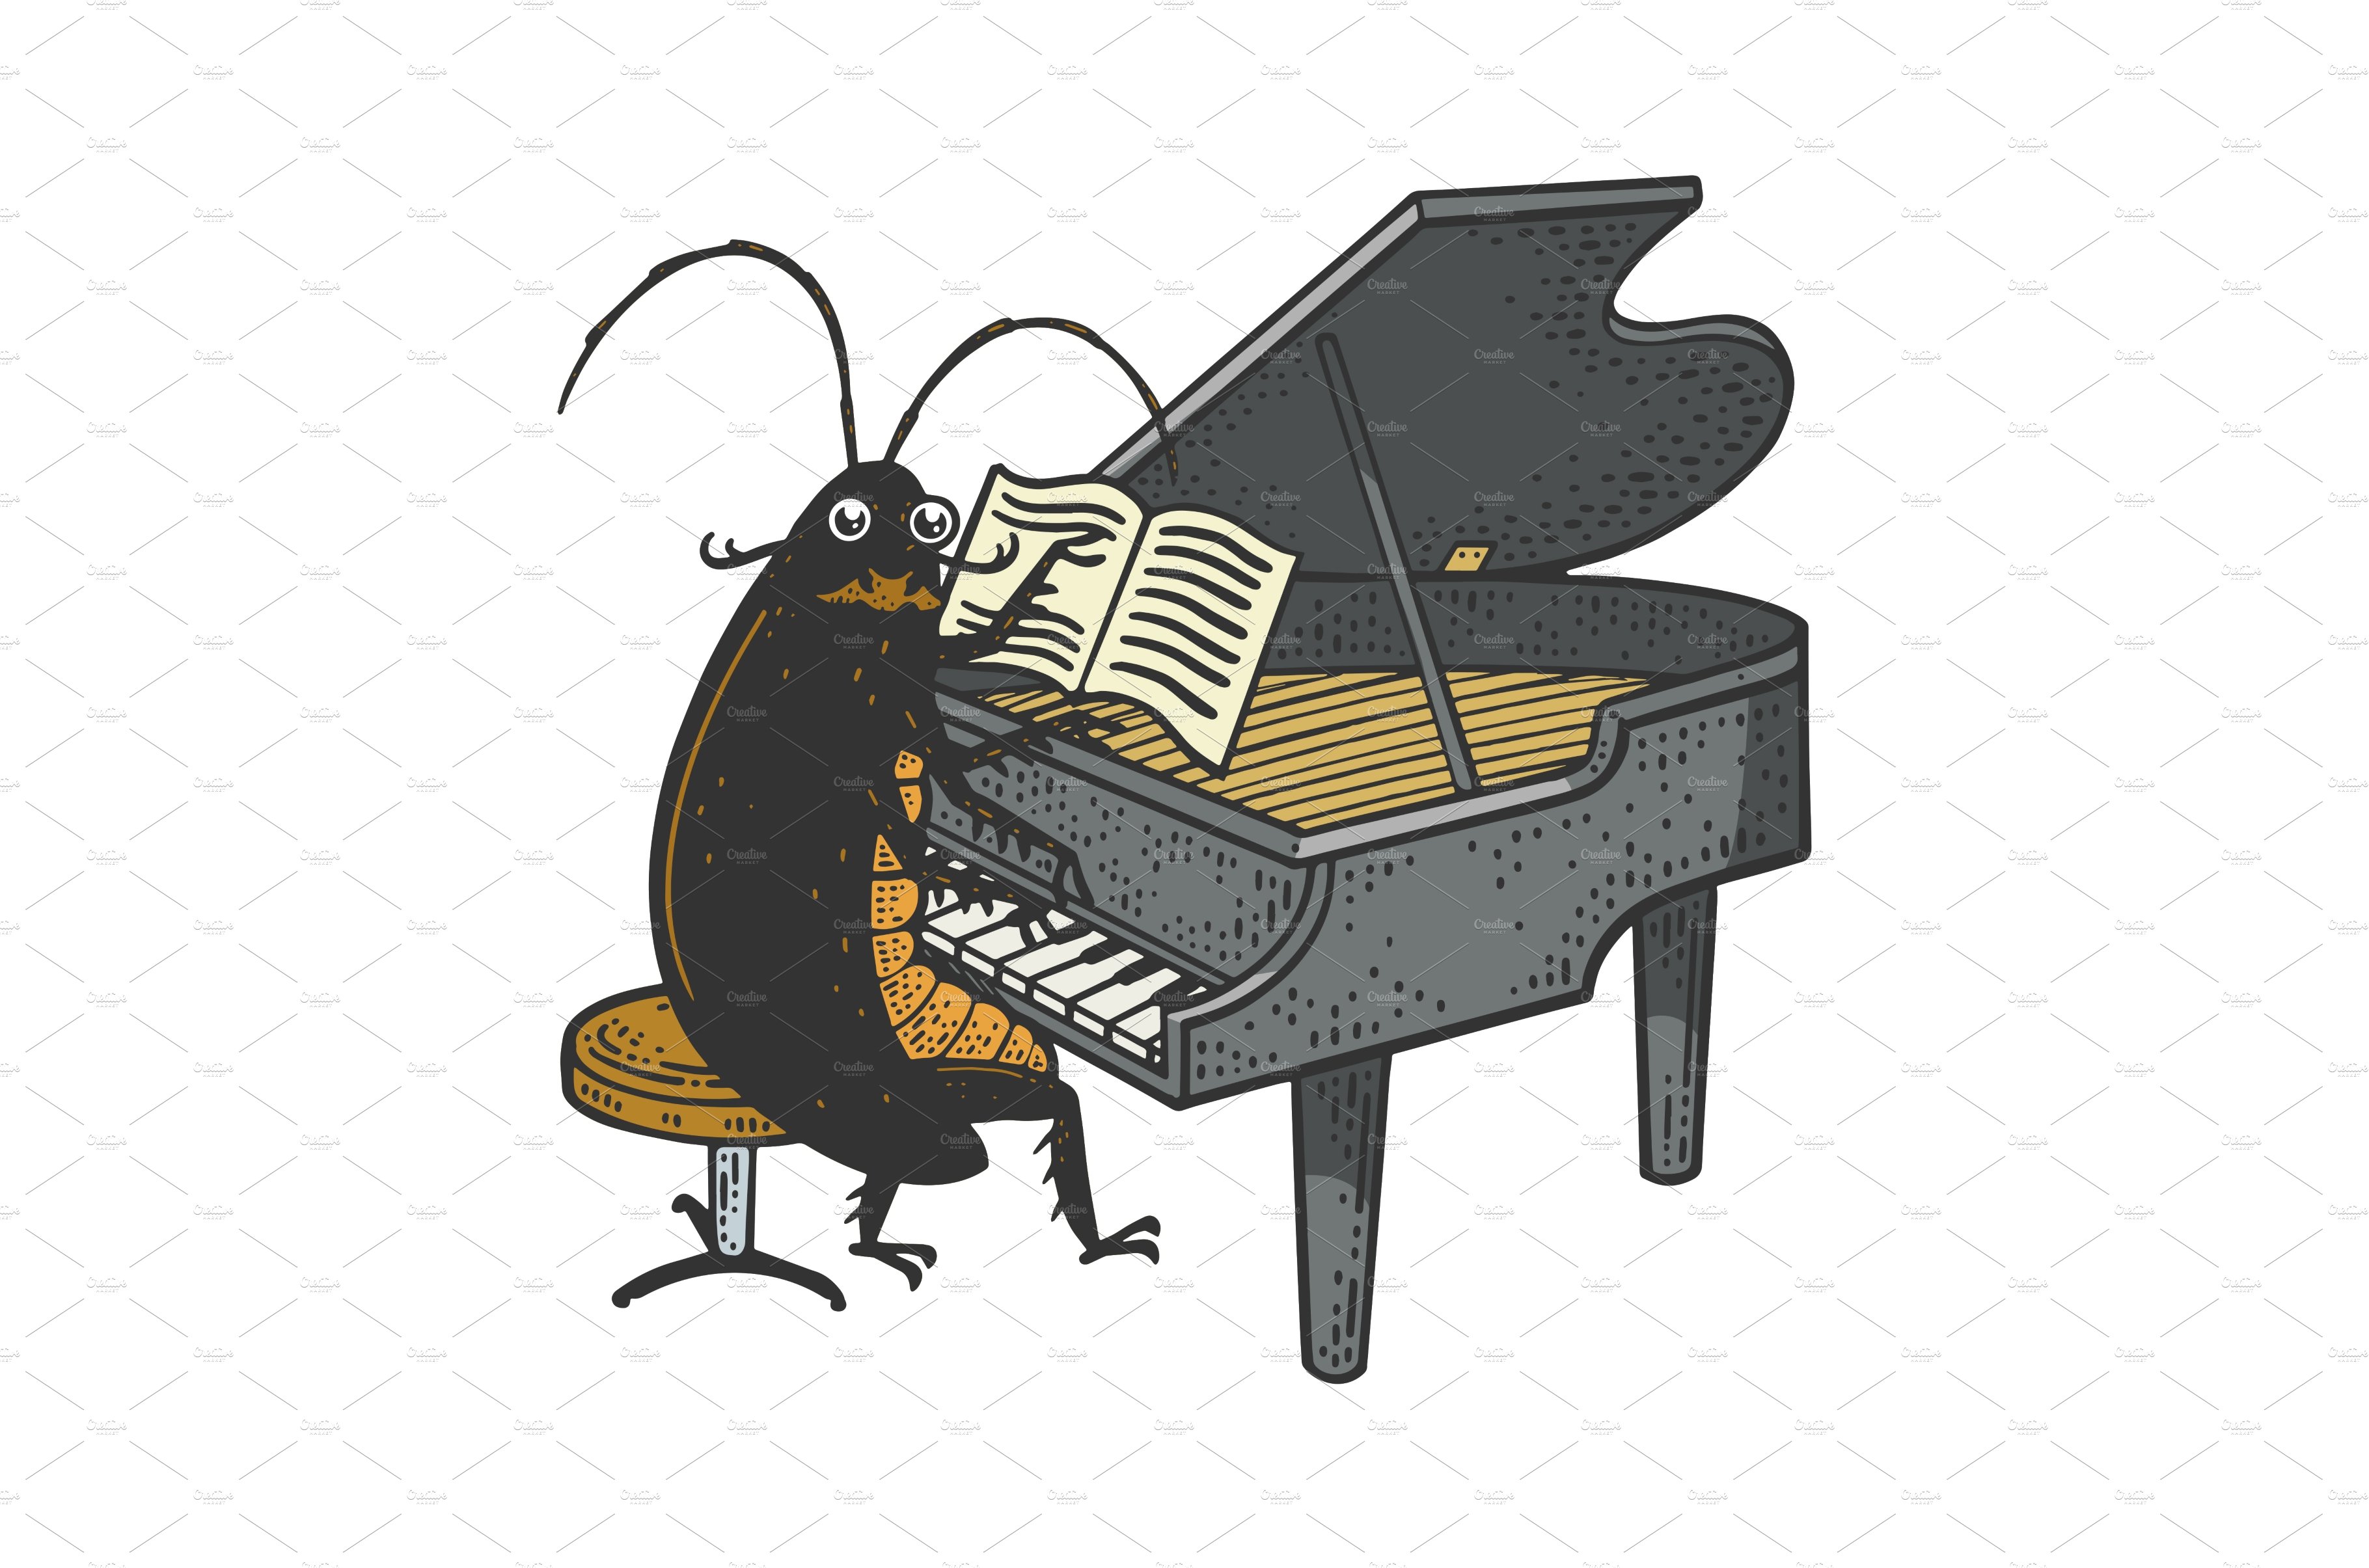 Cockroach grand piano sketch vector cover image.